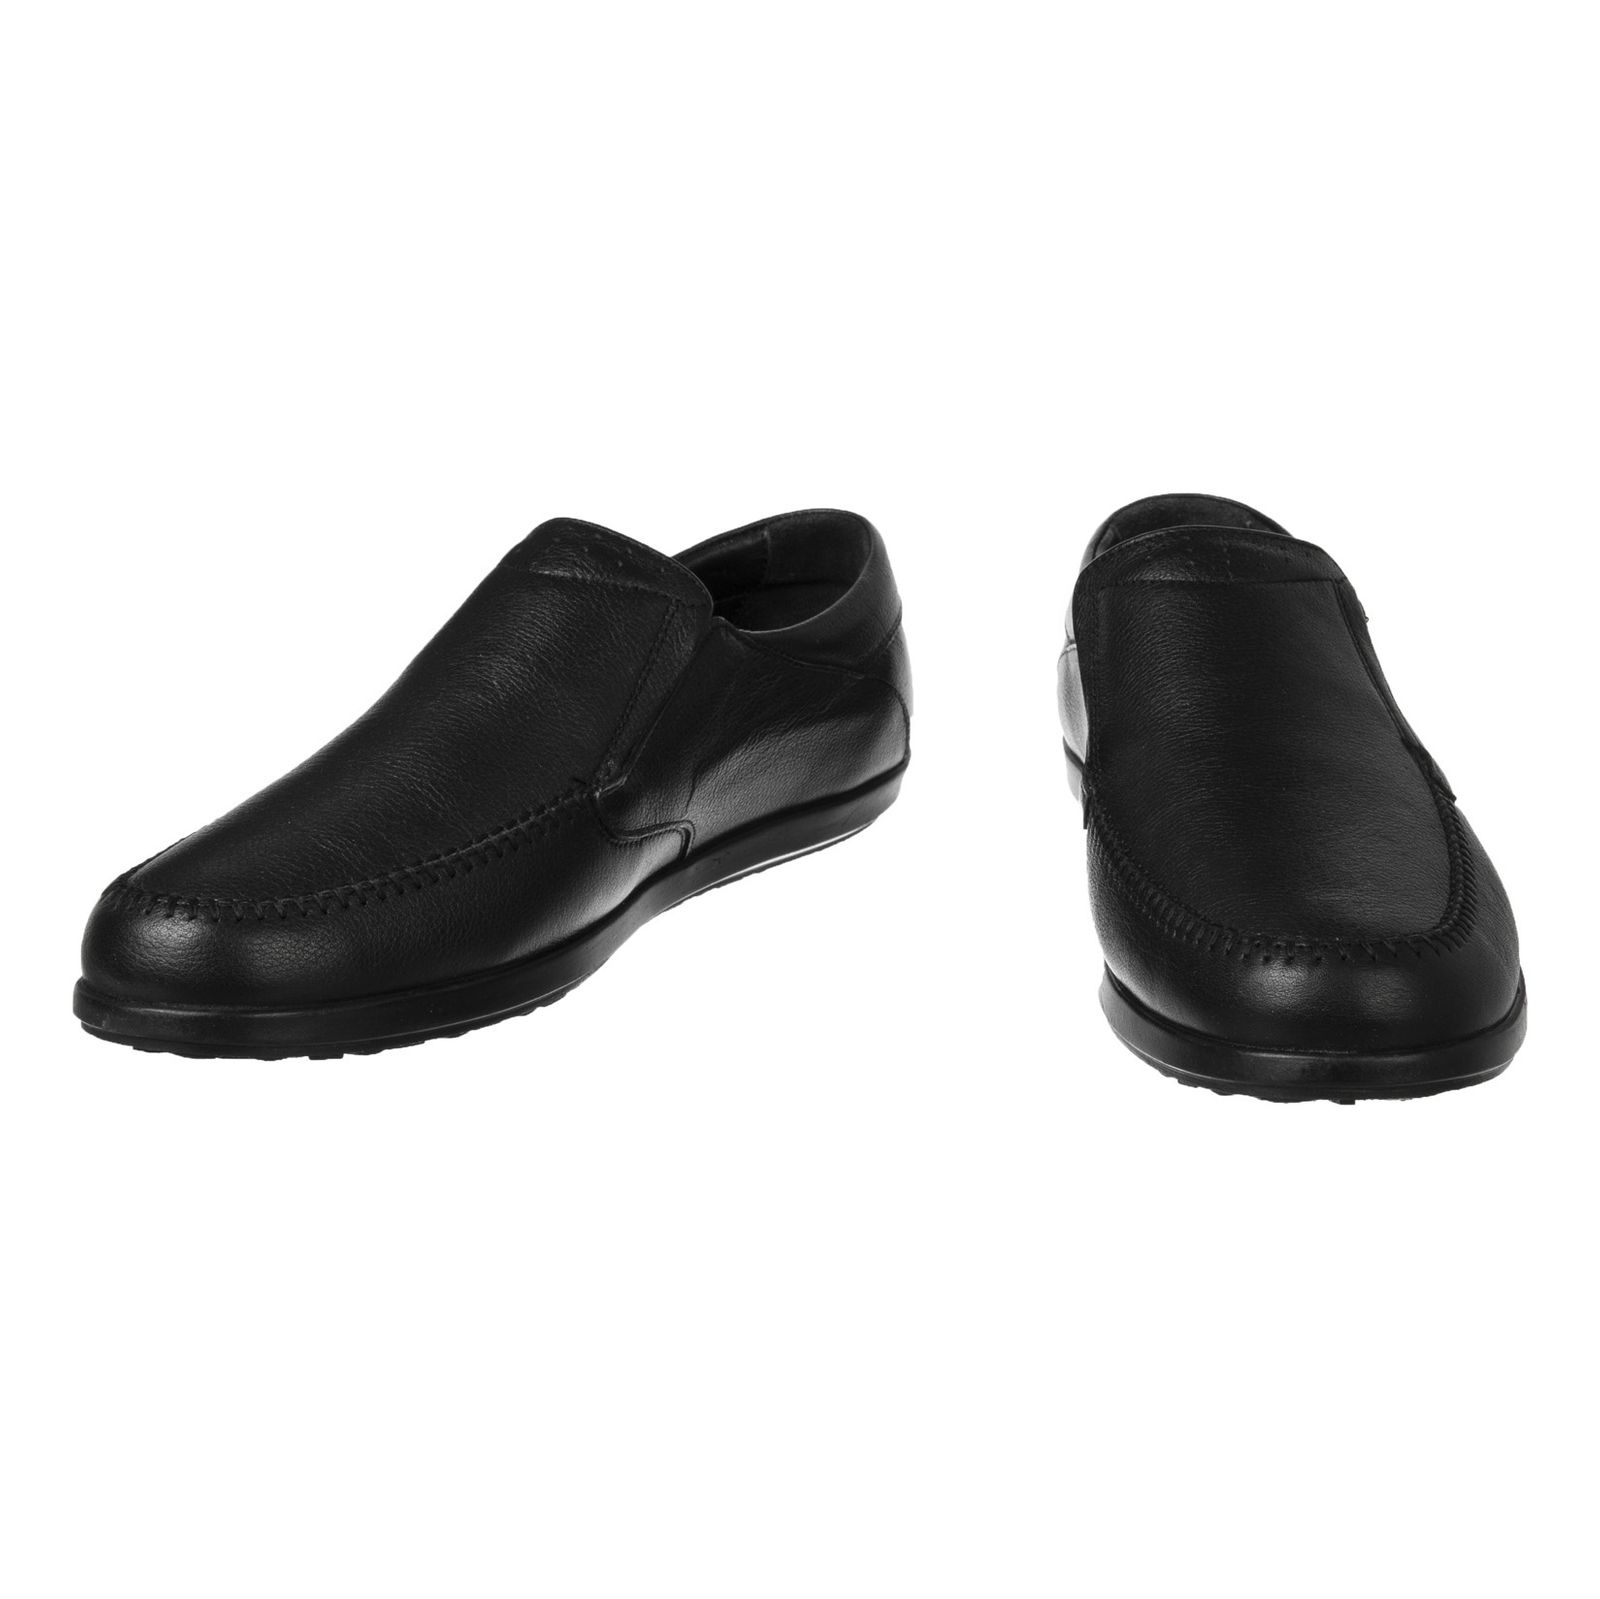 کفش روزمره مردانه فلوگارت مدل 100317221-101 - مشکی - 4